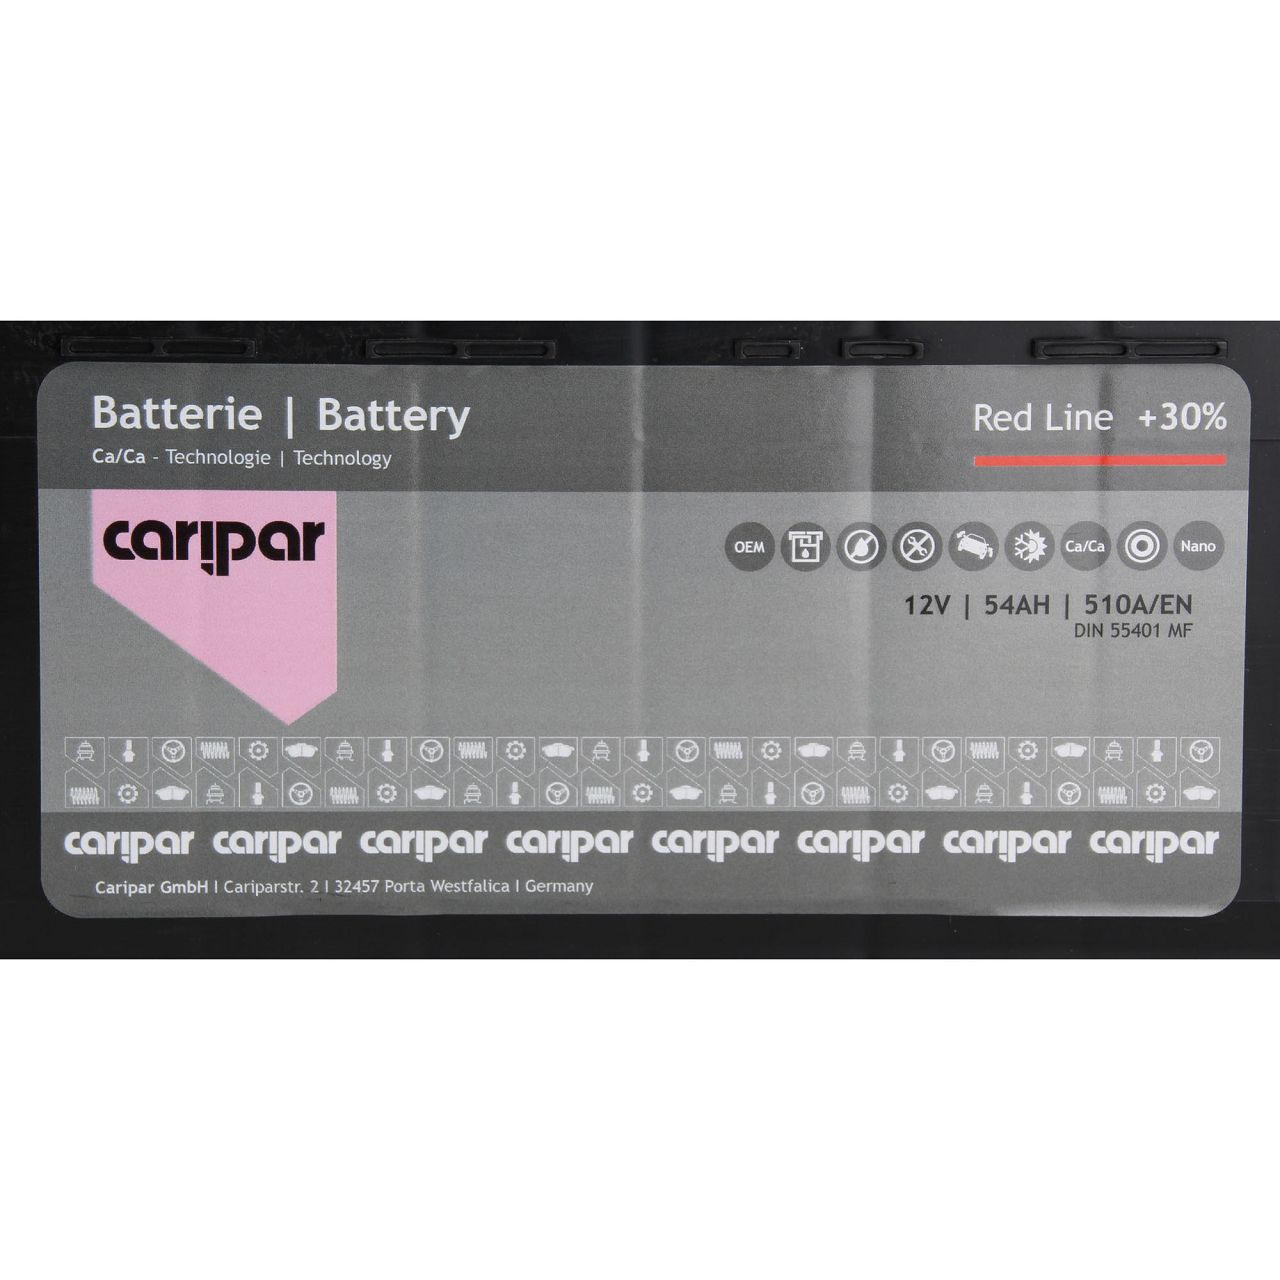 CARIPAR RED LINE +30% PKW KFZ Autobatterie Starterbatterie 12V 54Ah 510A/EN B13